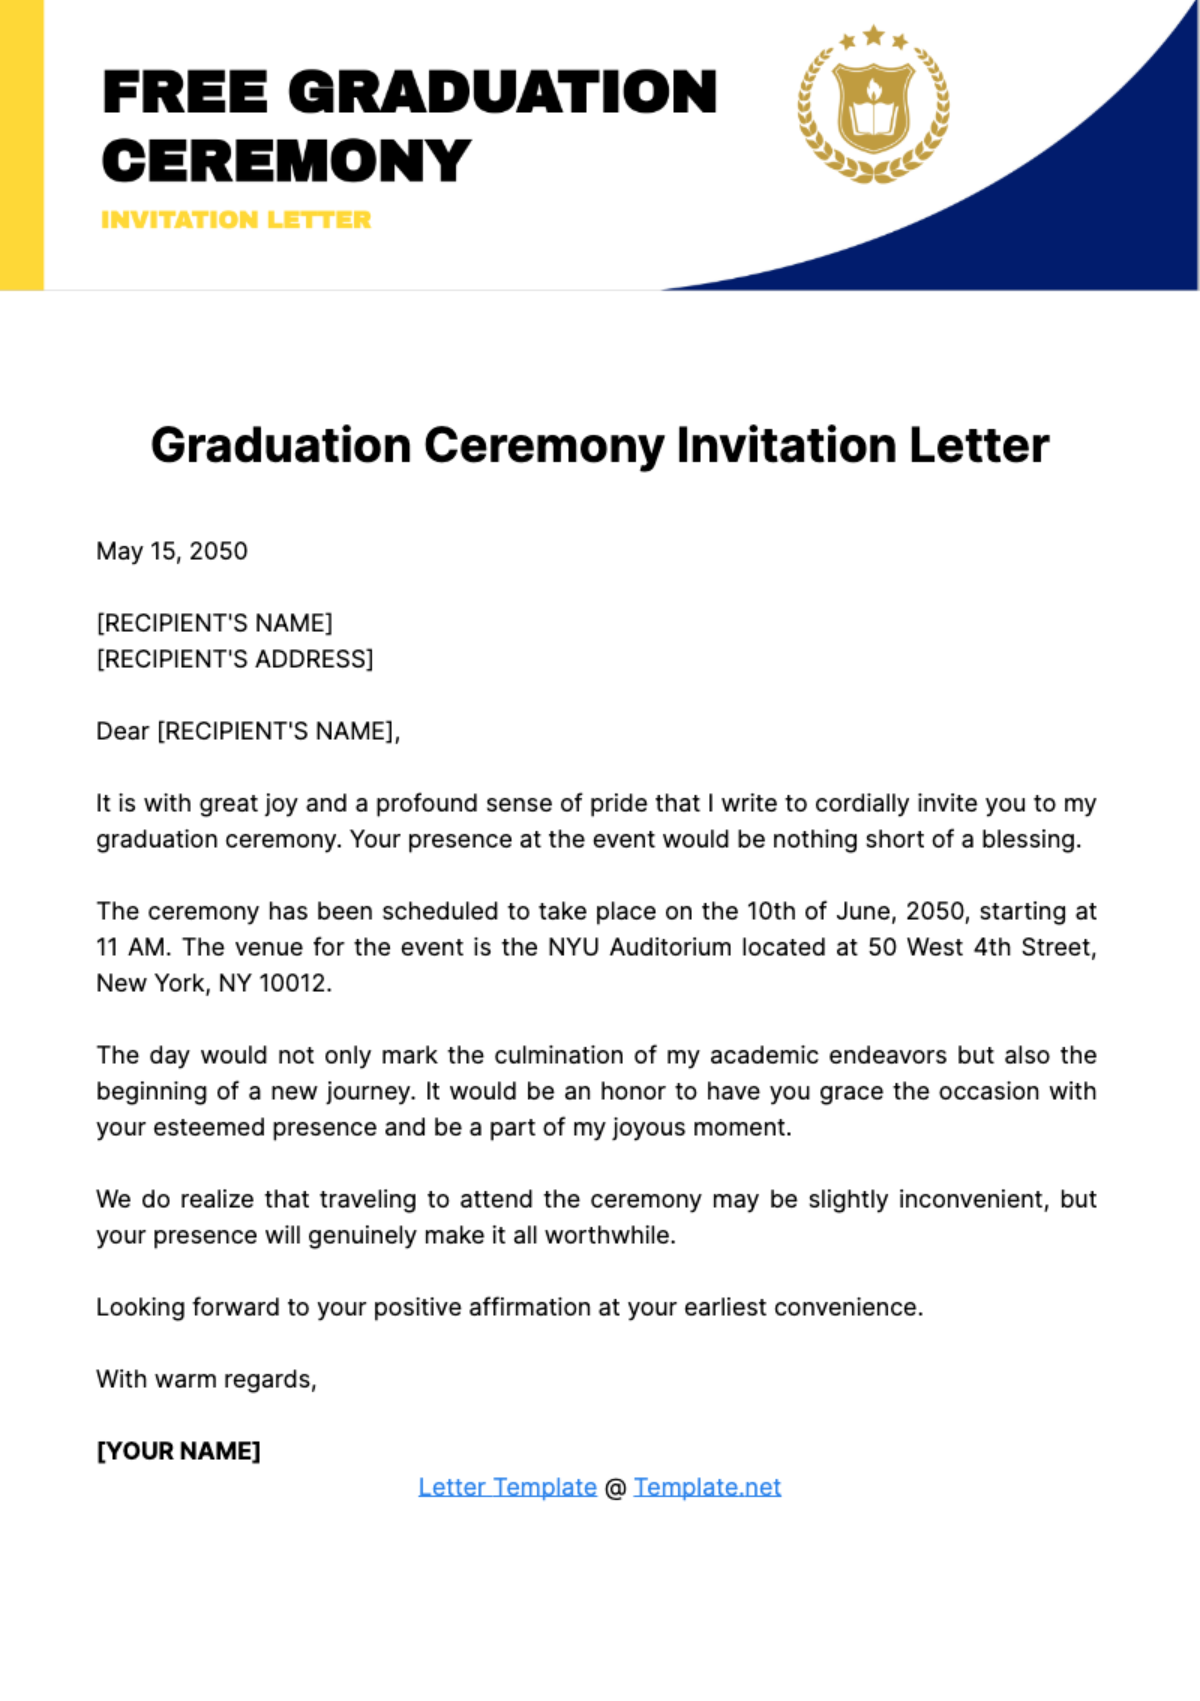 Free Graduation Ceremony Invitation Letter Template